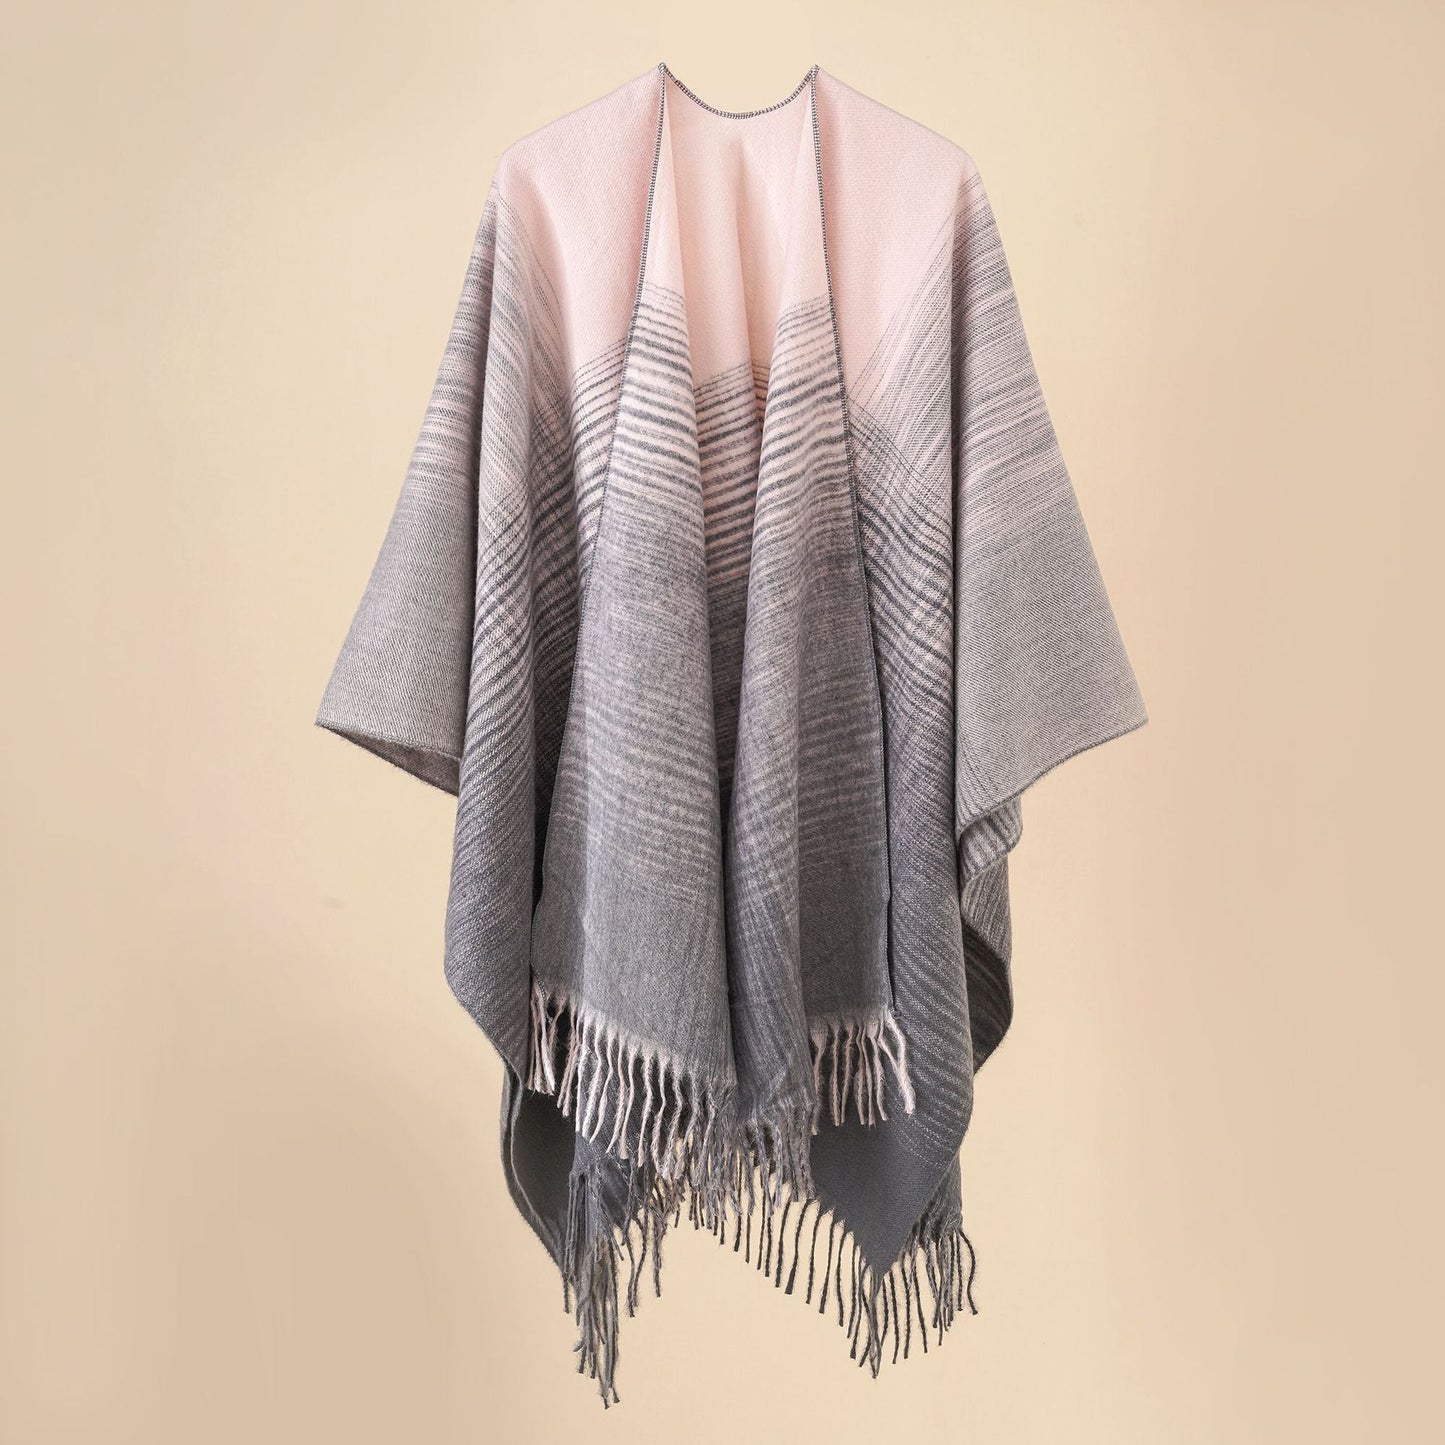 Fashion Tassels Shawls for Women-shawls-Pink-155CM-Free Shipping at meselling99